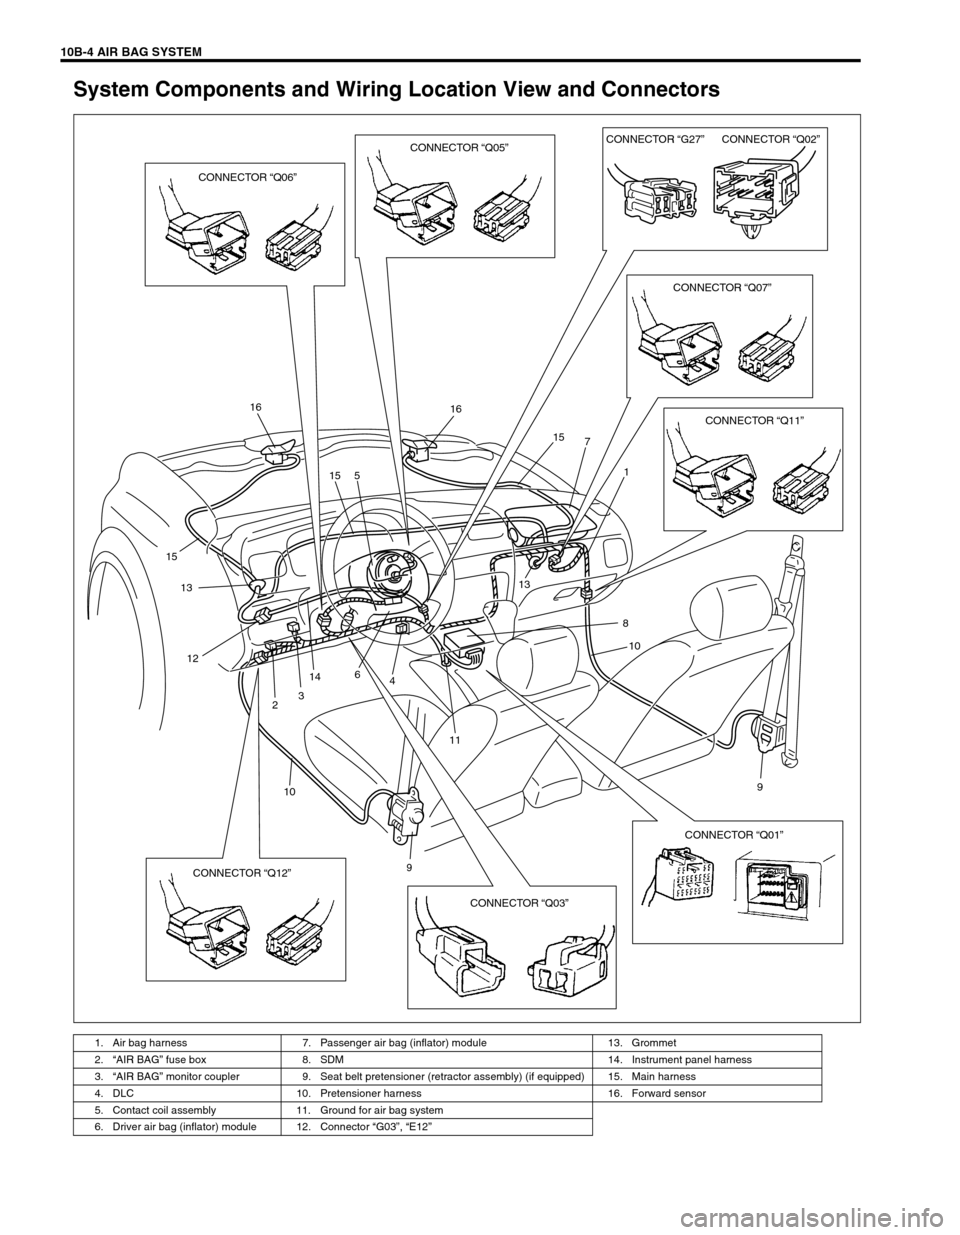 SUZUKI GRAND VITARA 1999 2.G Service Manual 10B-4 AIR BAG SYSTEM
System Components and Wiring Location View and Connectors
1. Air bag harness  7. Passenger air bag (inflator) module 13. Grommet
2.“AIR BAG” fuse box 8. SDM 14. Instrument pan